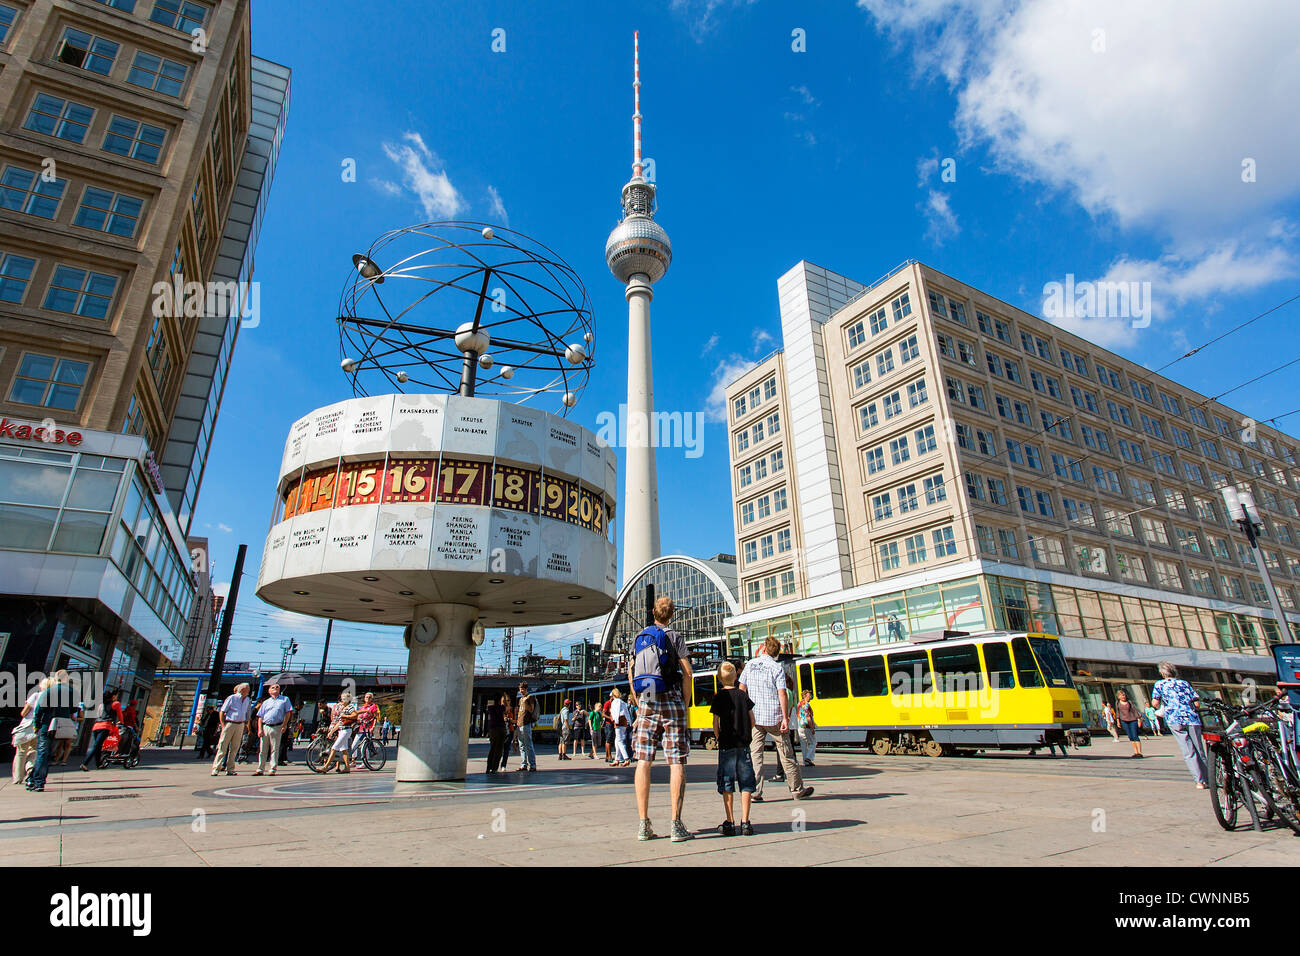 Europe, Germany, Berlin, Alexanderplatz, Alexanderplatz, the Weltzeituhr, the Fernsehturm and the Berolina Haus Stock Photo